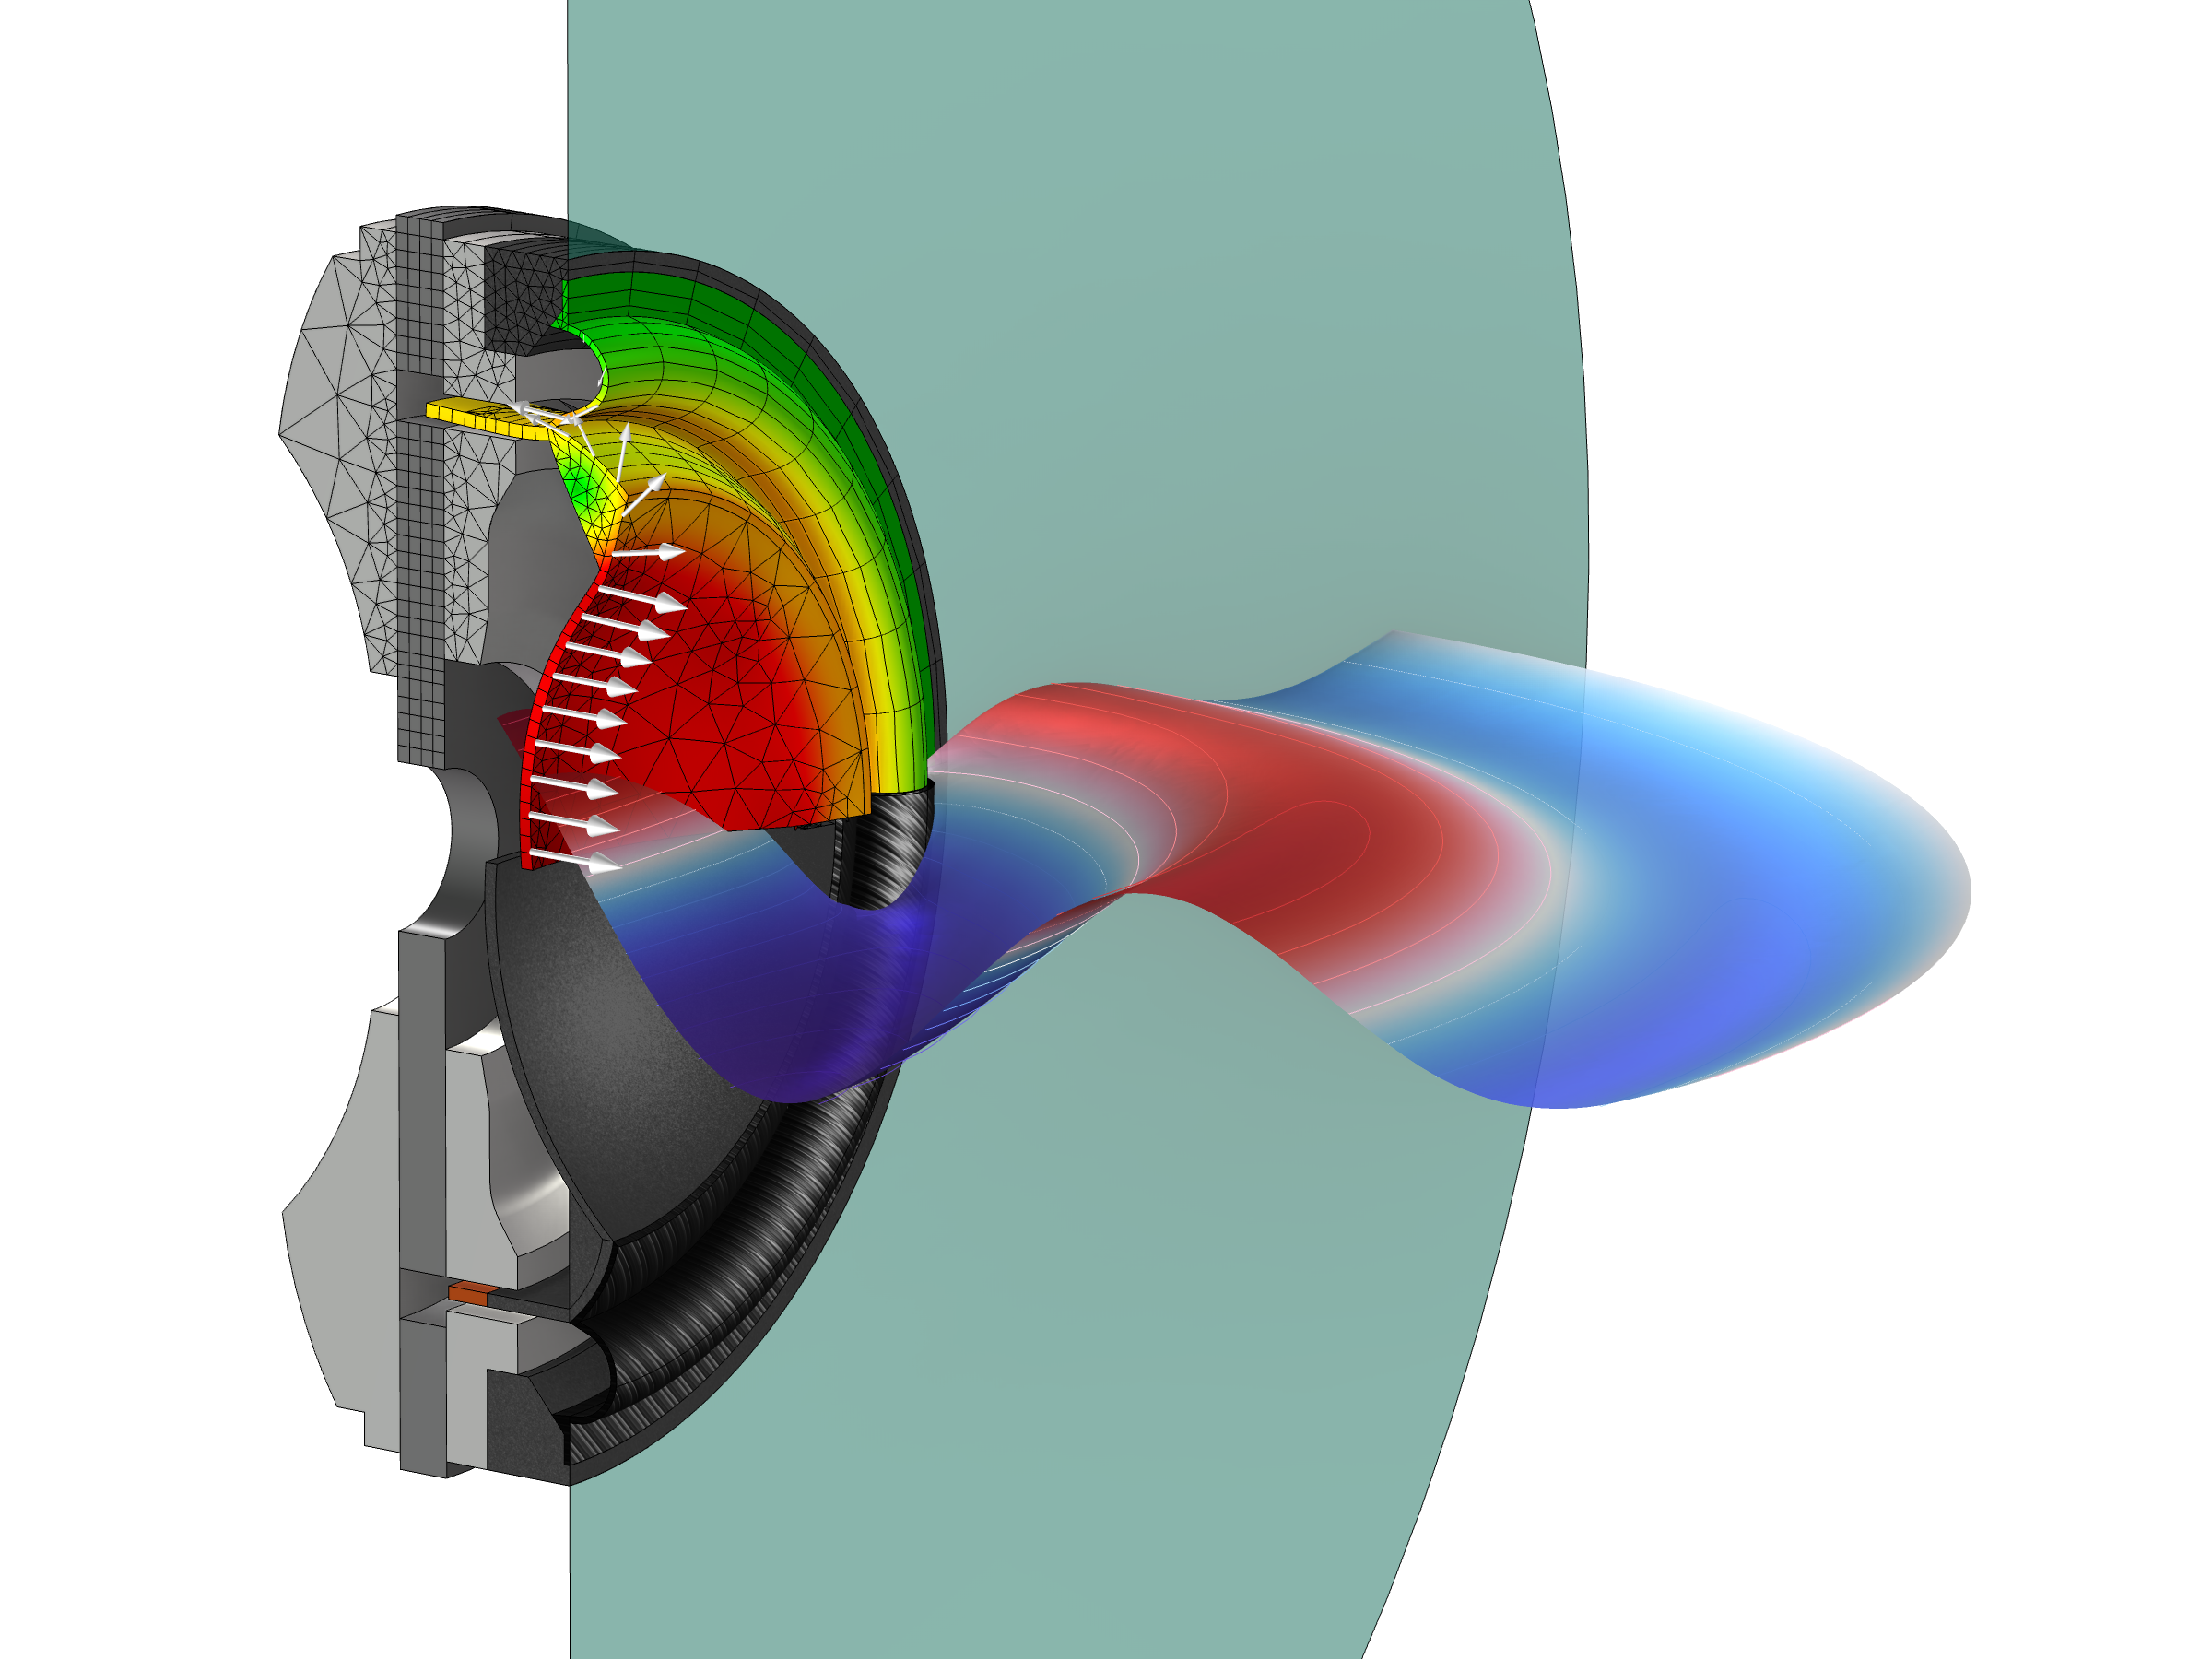 cross-section and simulation of an electrodynamic full-range loudspeaker